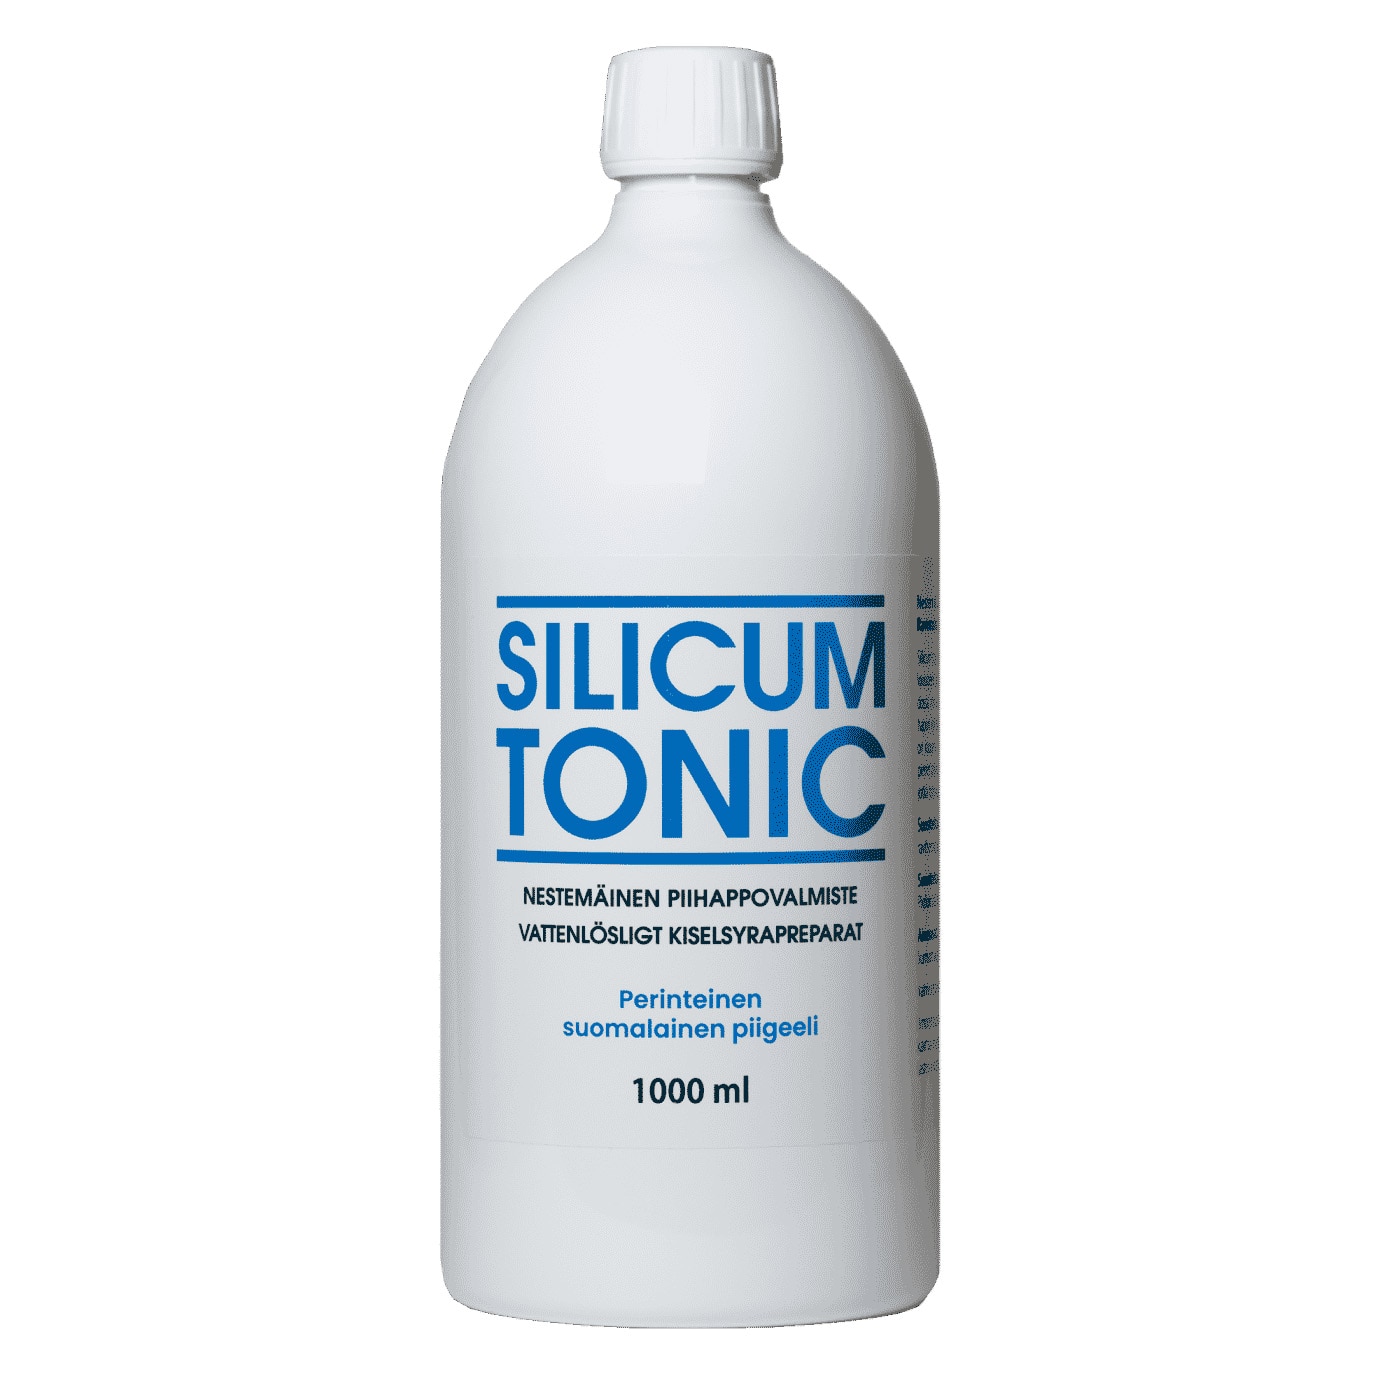 Silicum Tonic -piihappogeeli